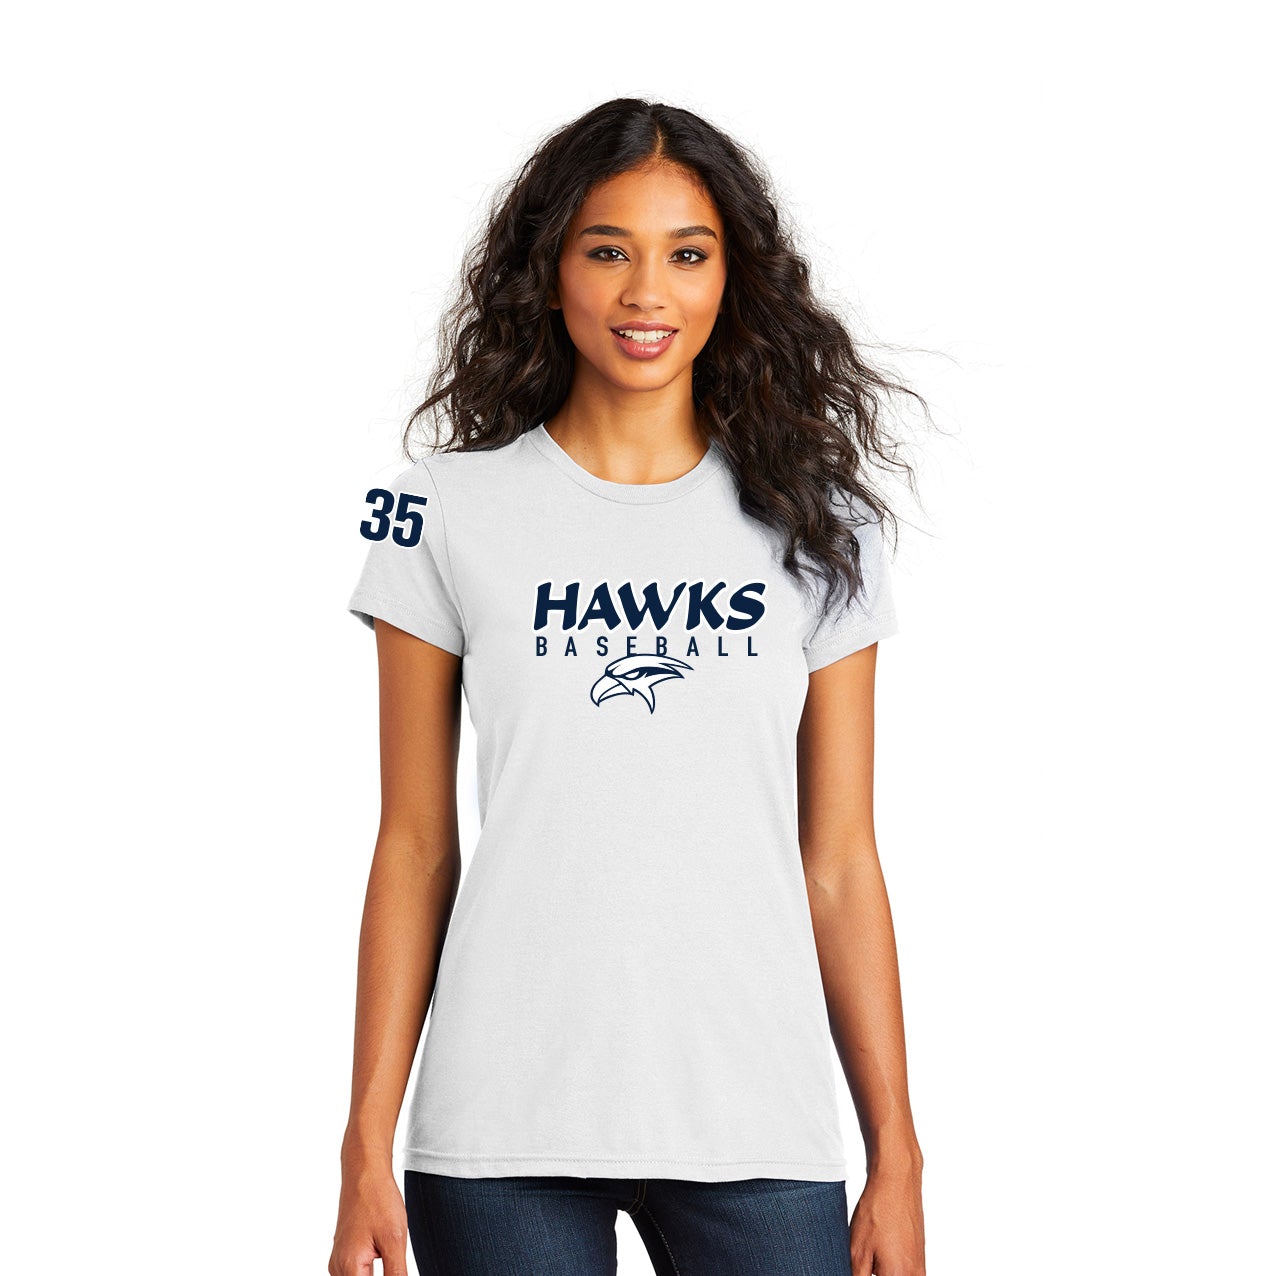 Hawks Baseball Women's Short Sleeve Cotton Tee